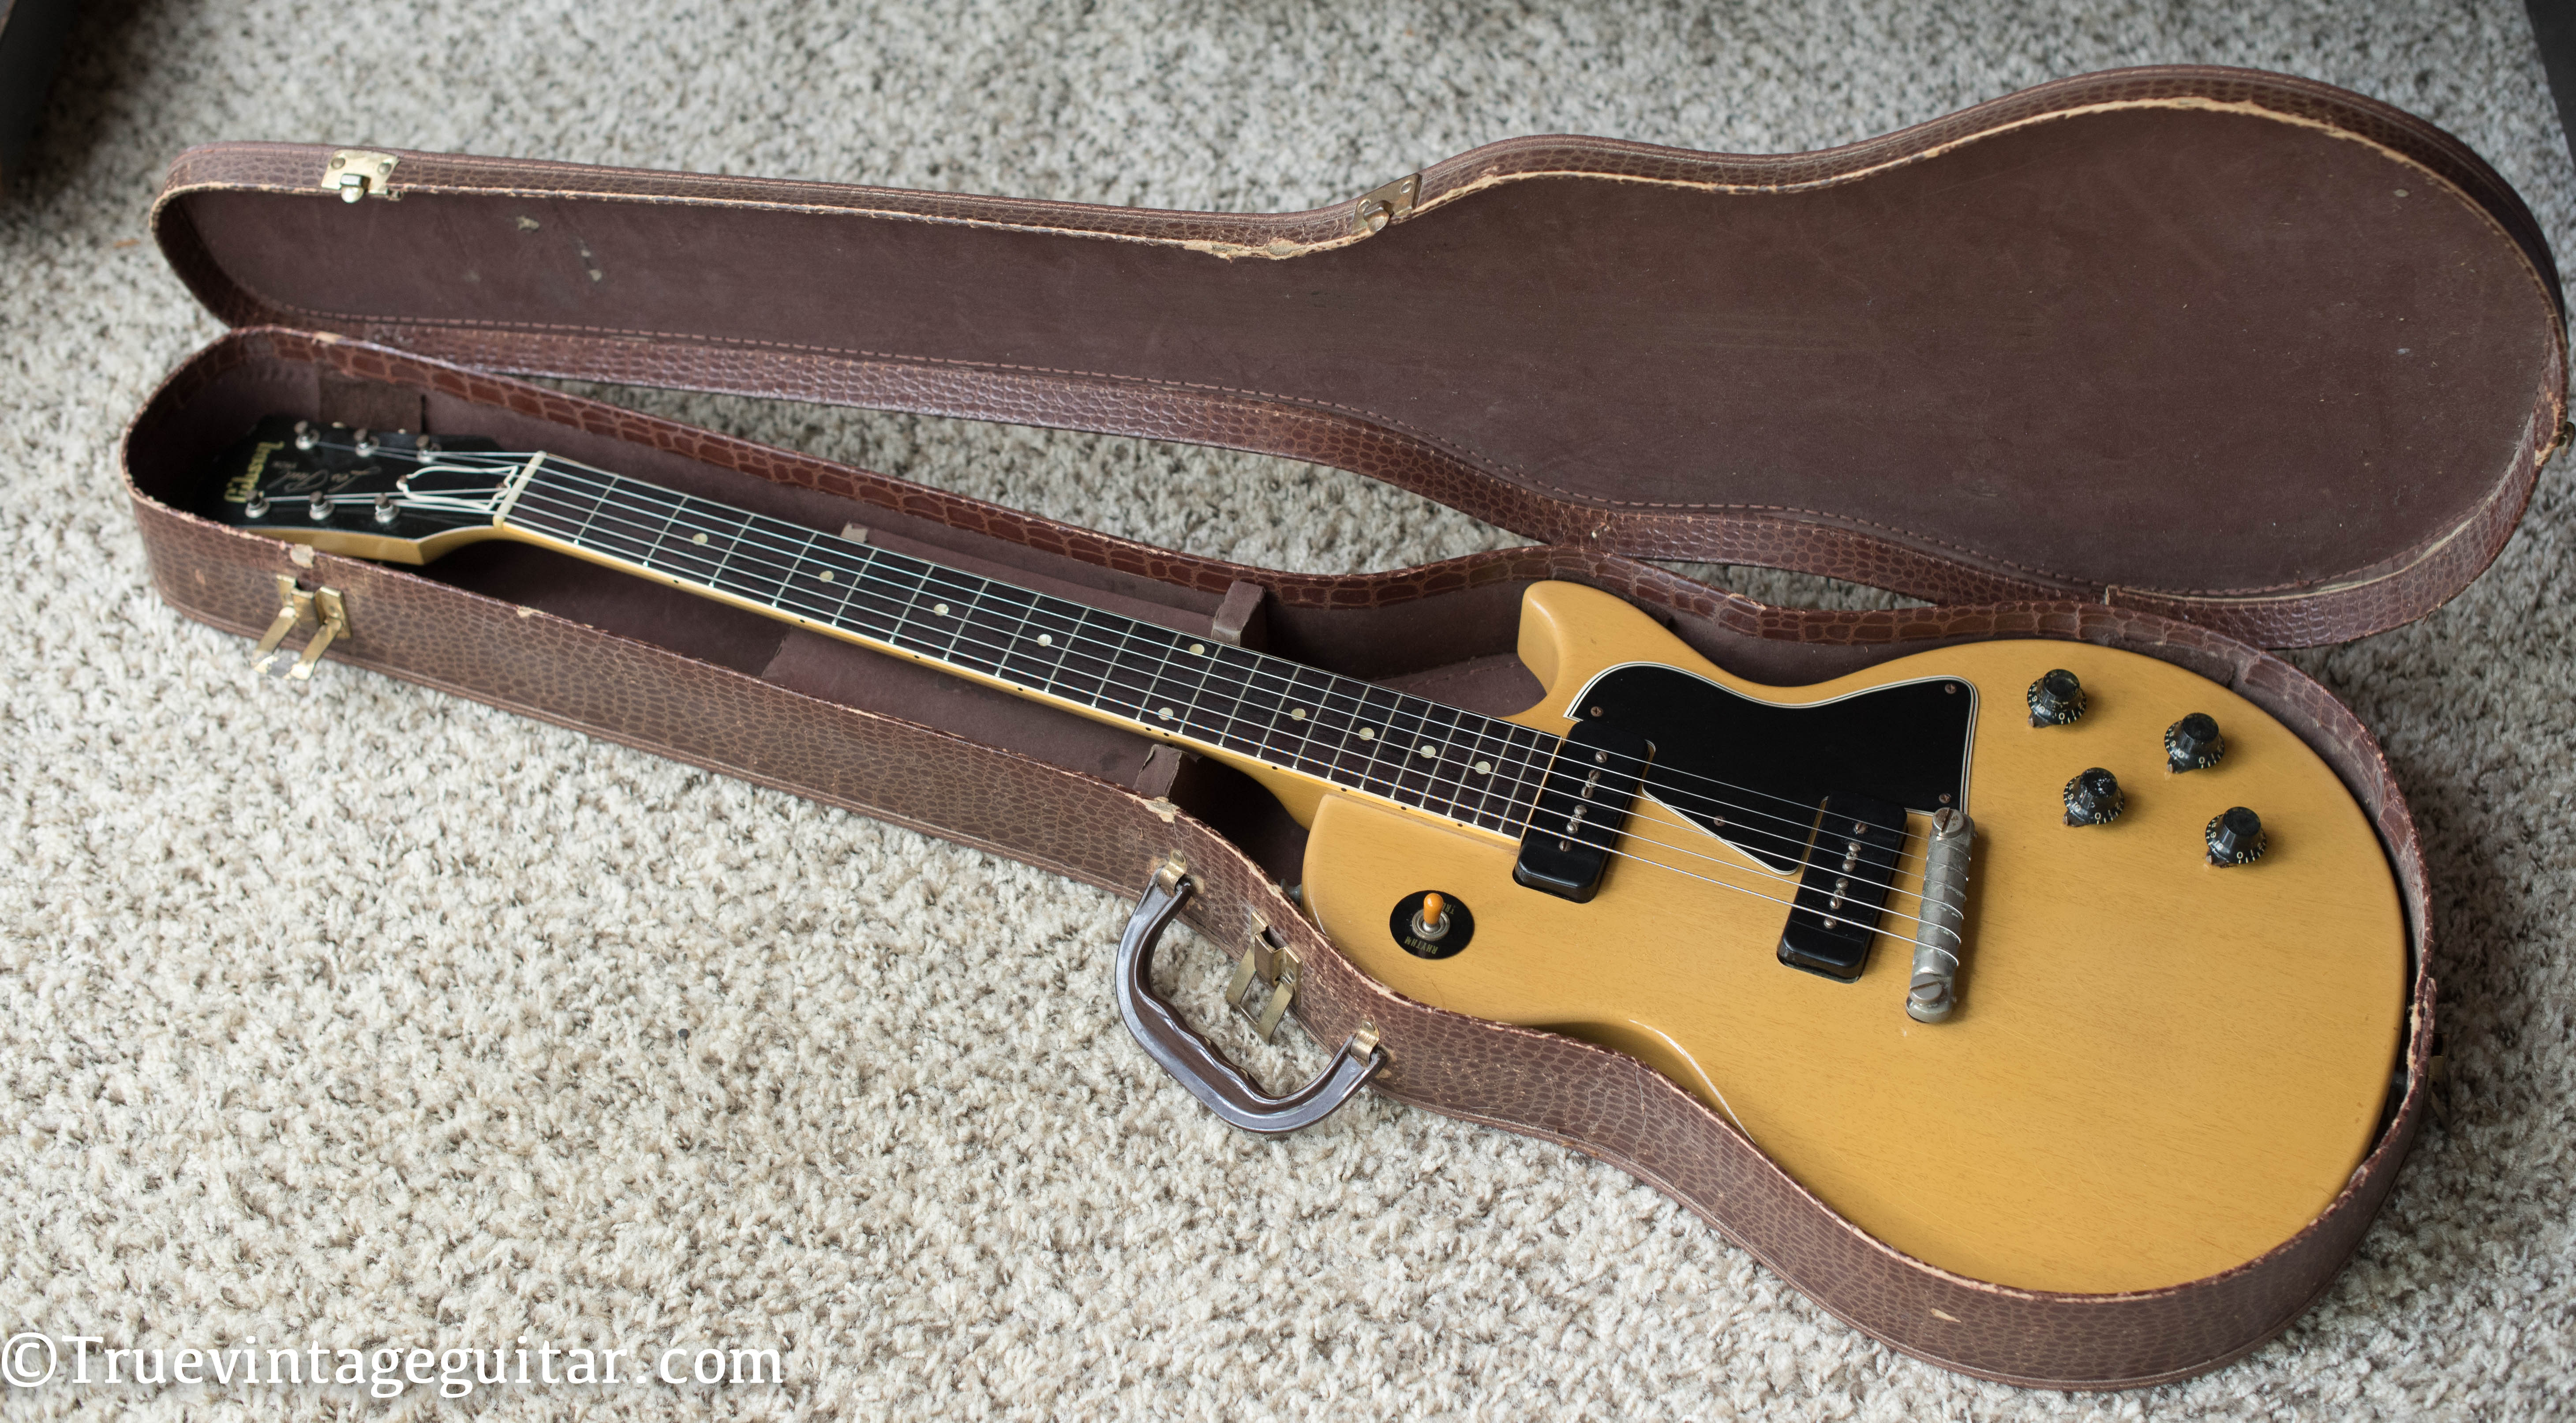 Les Paul 1957 Gibson guitar values